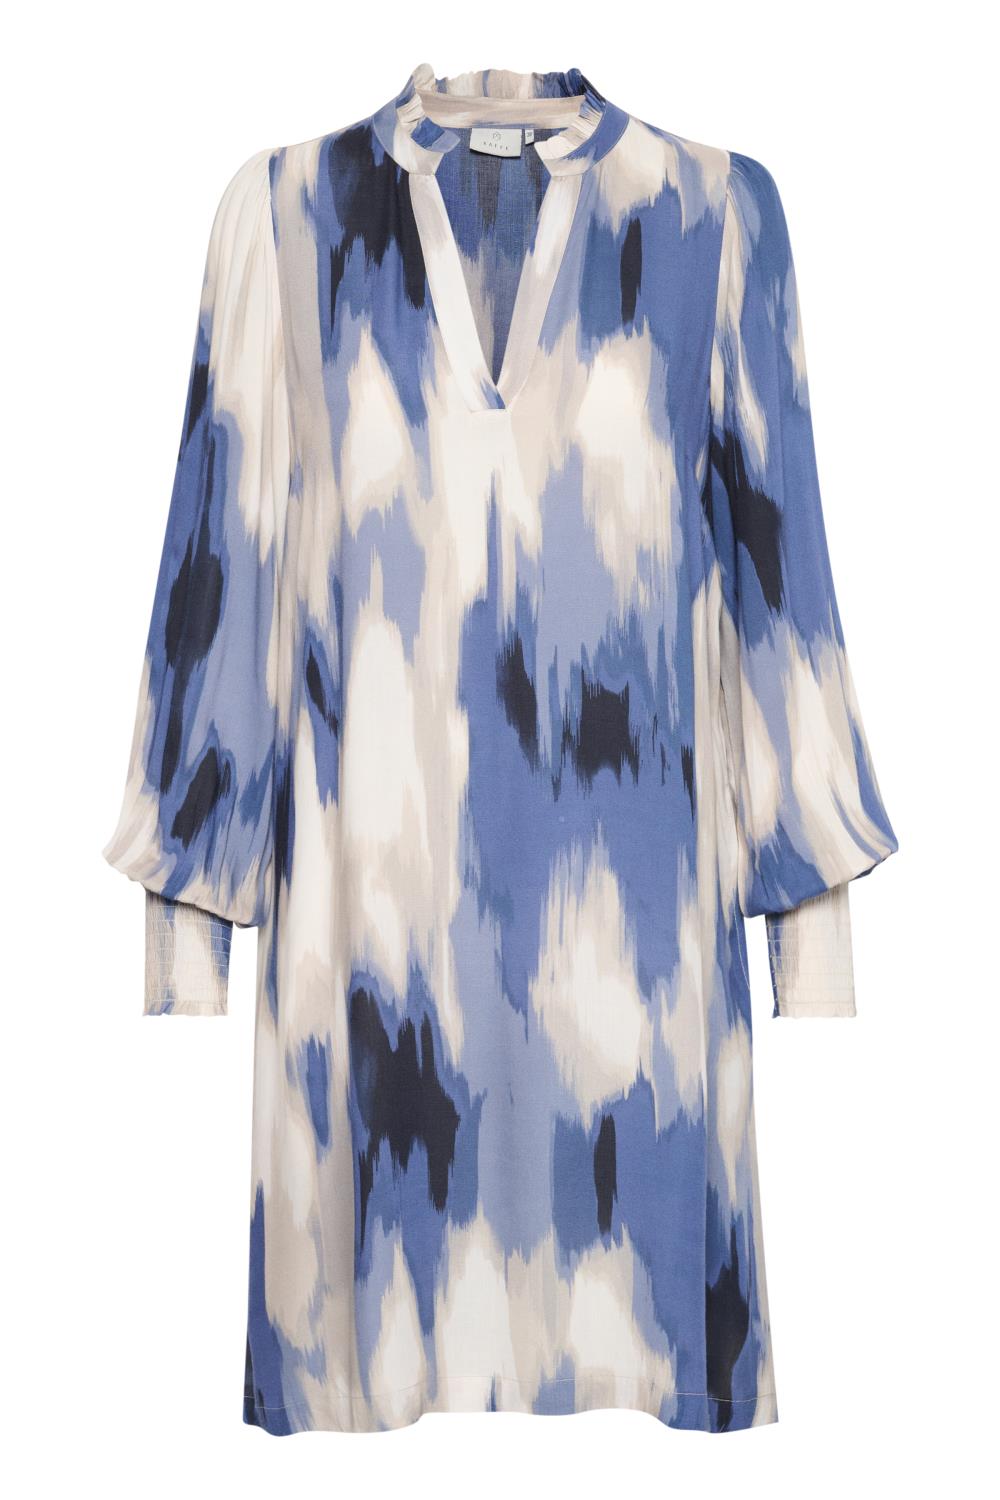 KAffe KAbeathe Short Dress, blå/beige mønstret